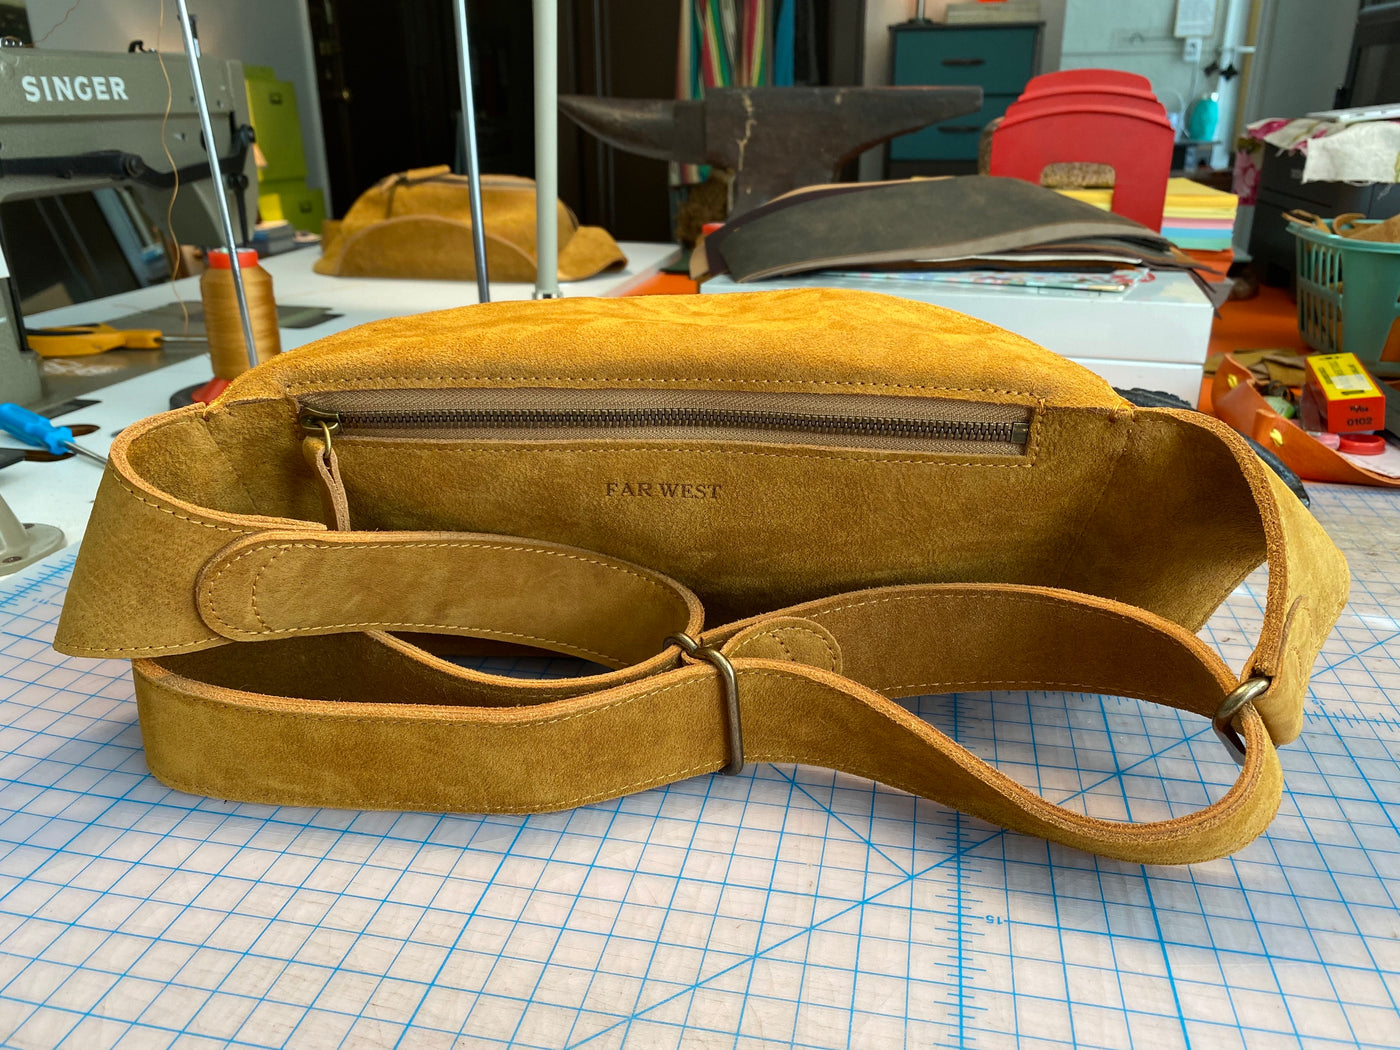 Far West Technical Leather Dopp Kit